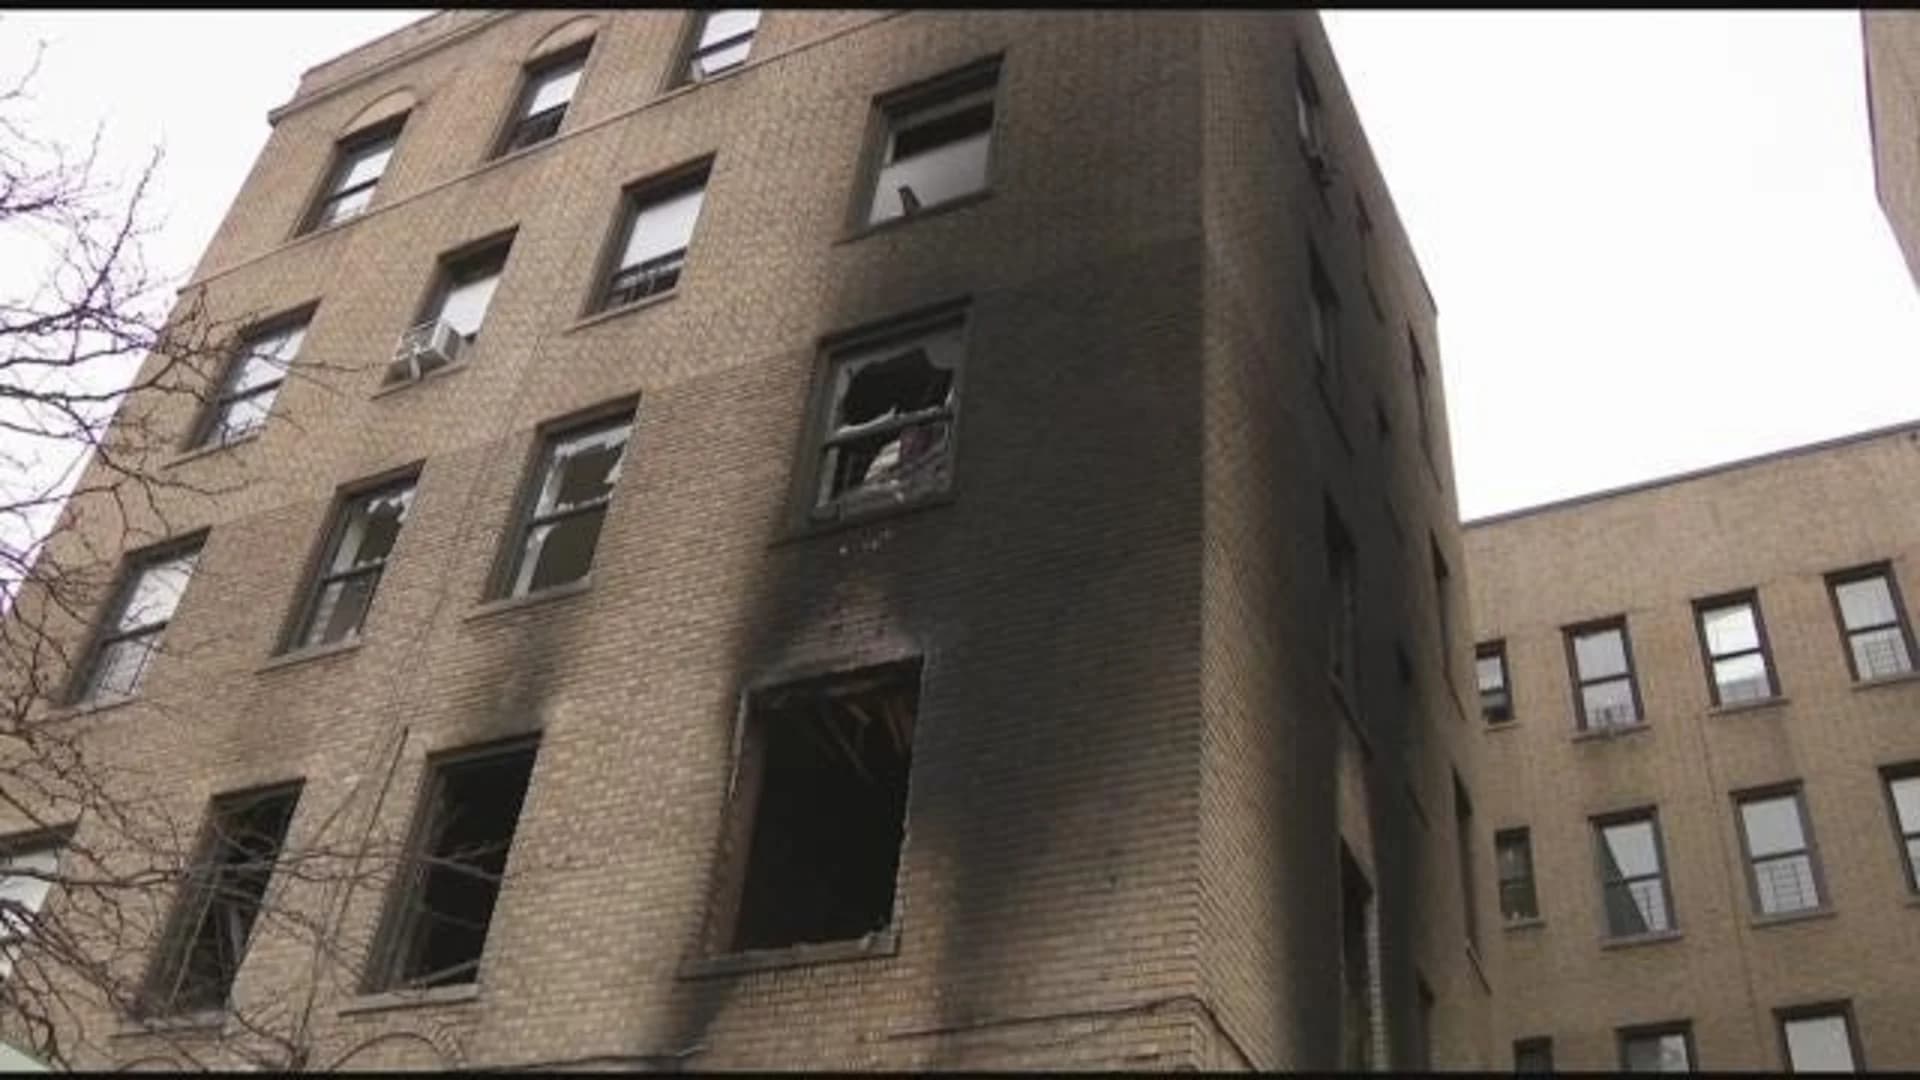 2-alarm fire breaks out inside Fordham building